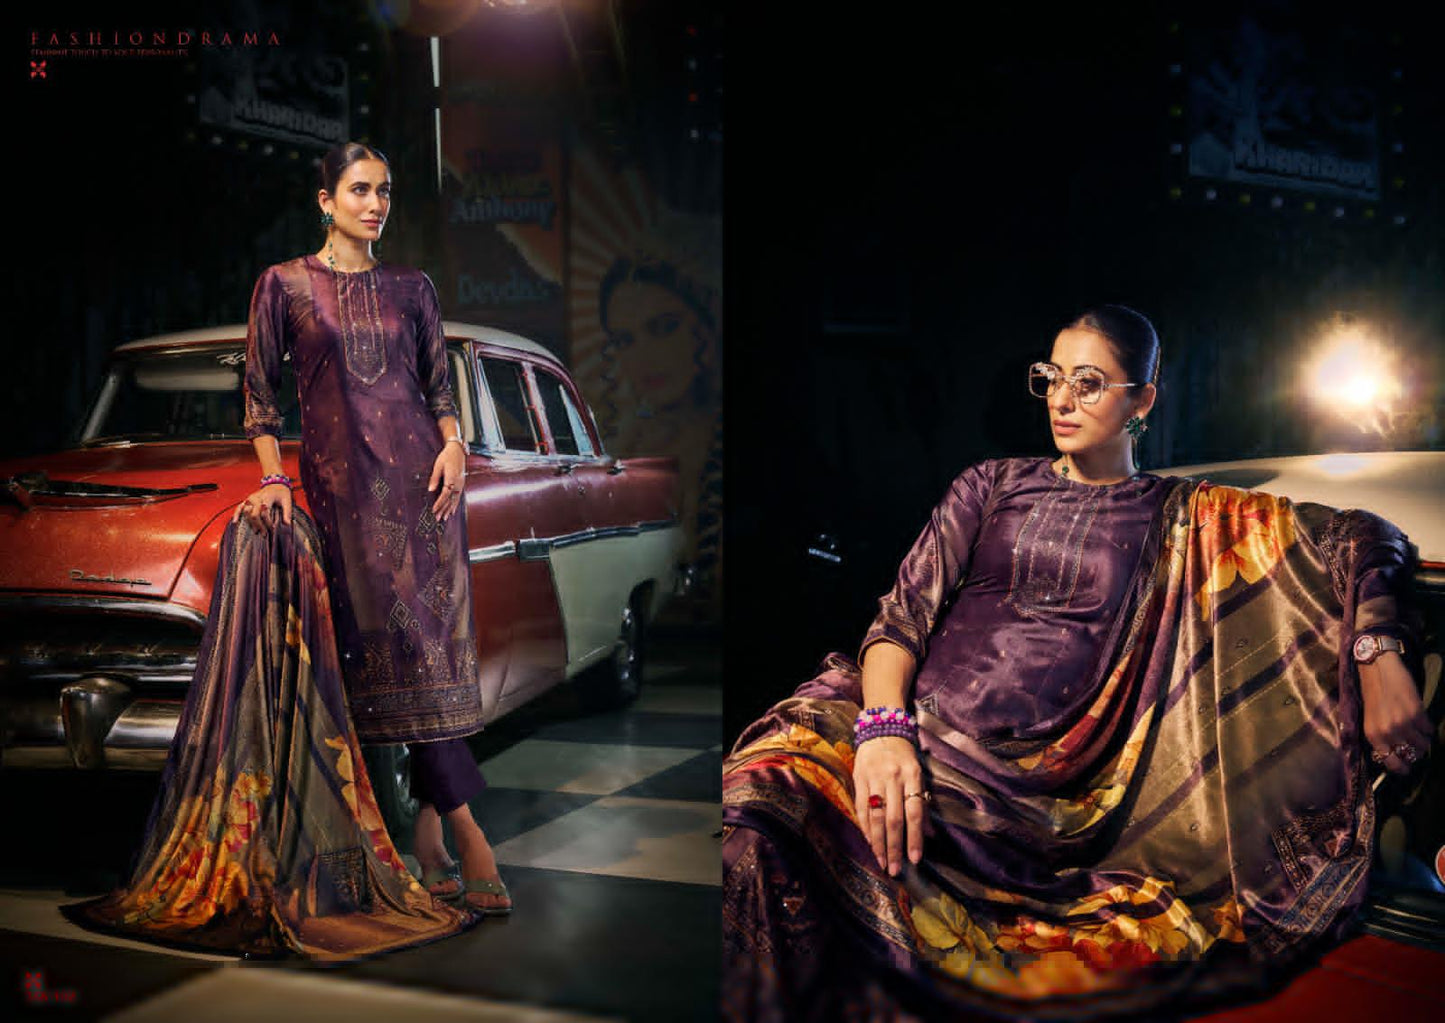 Glory Sargam Prints Velvet Suits